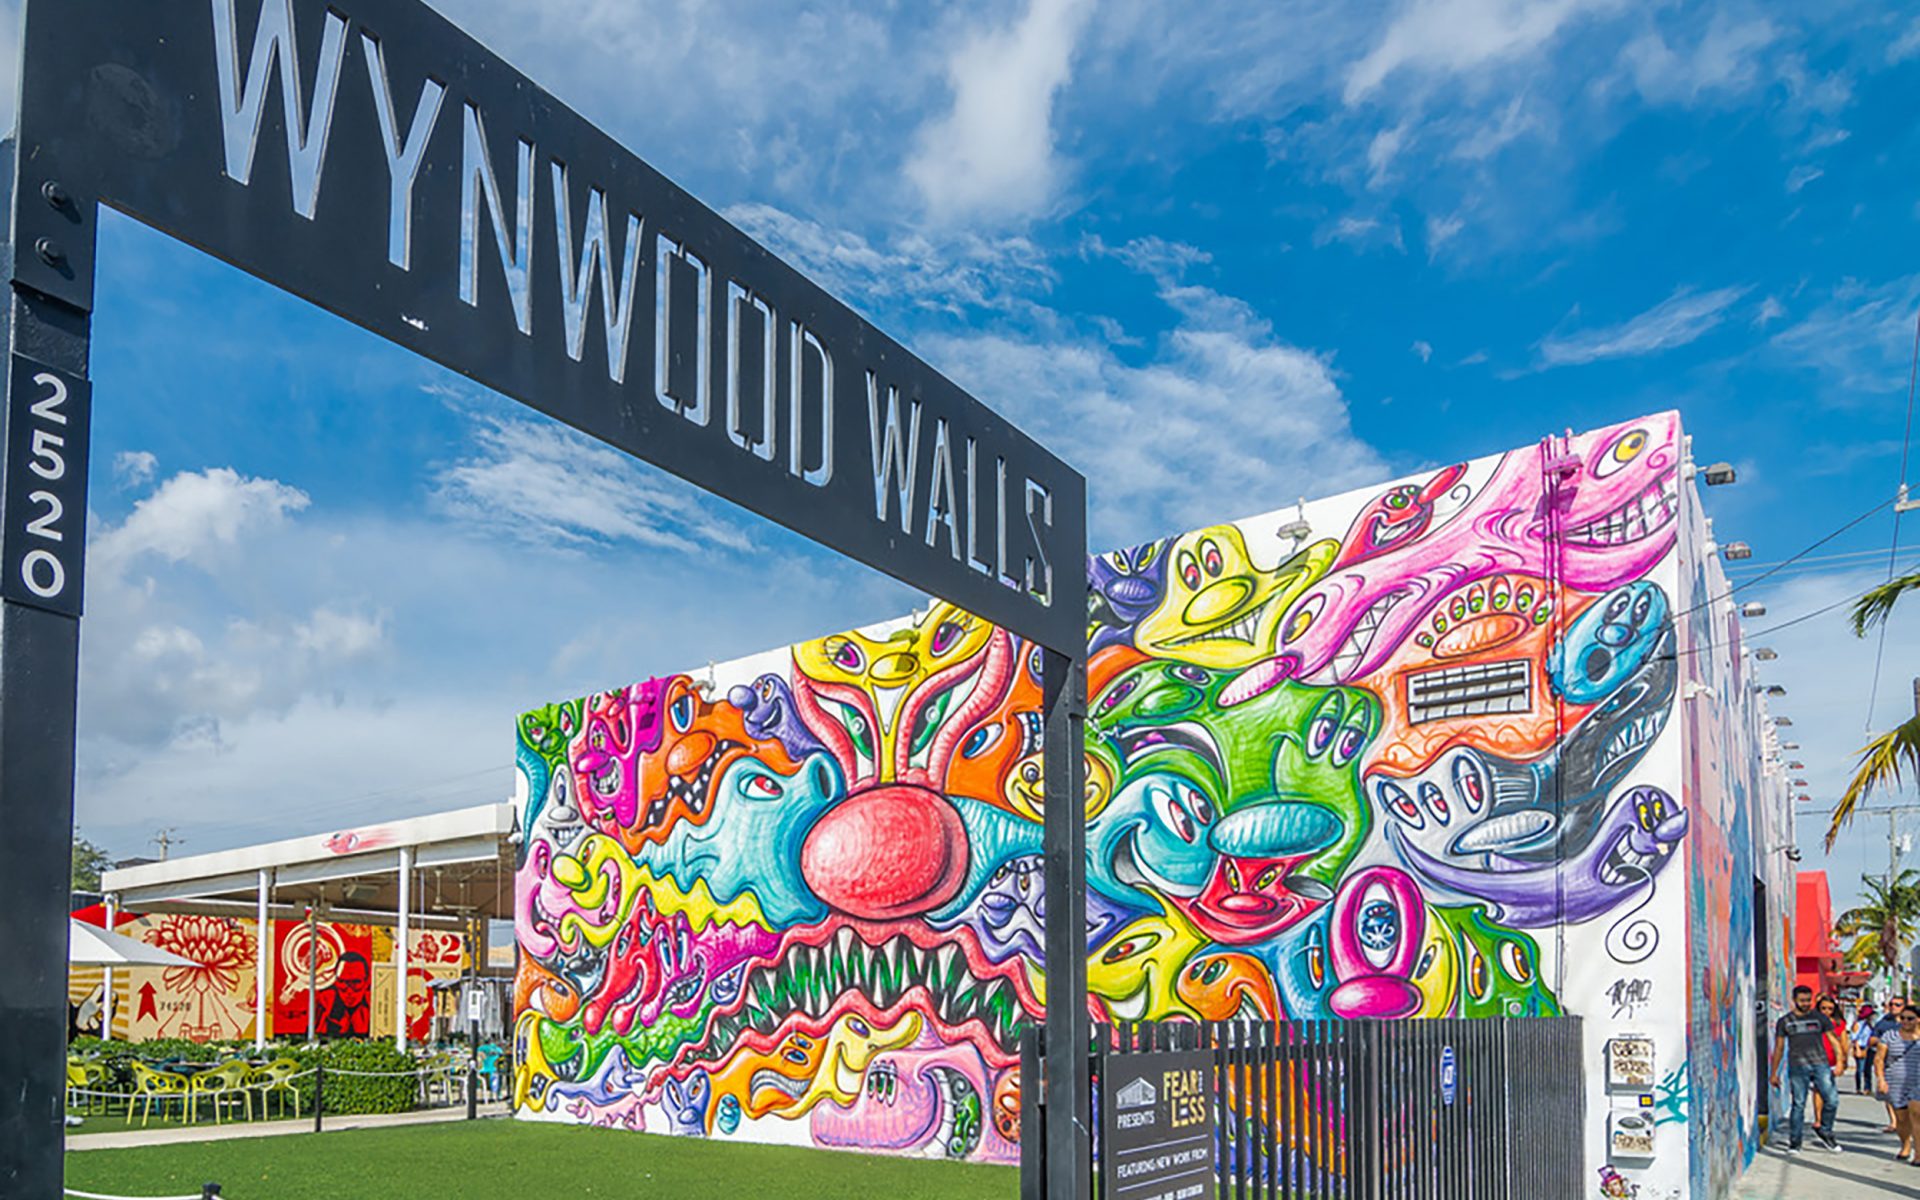 wynwood walls tour